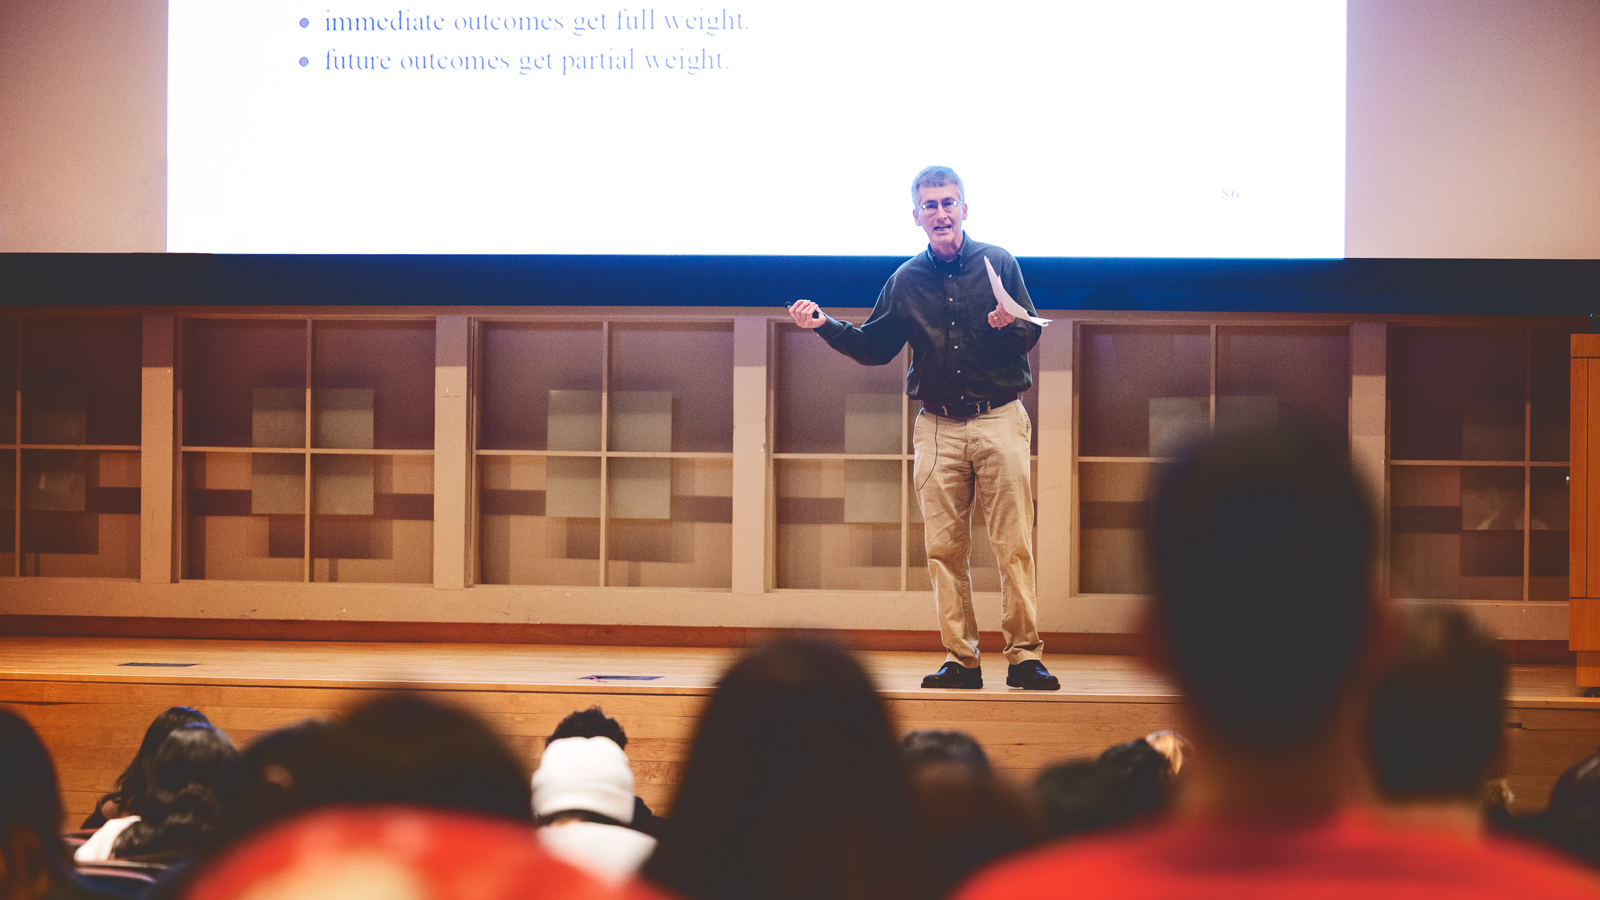 Professor Ted O’Donoghue lectures on risk-taking in Statler Auditorium.